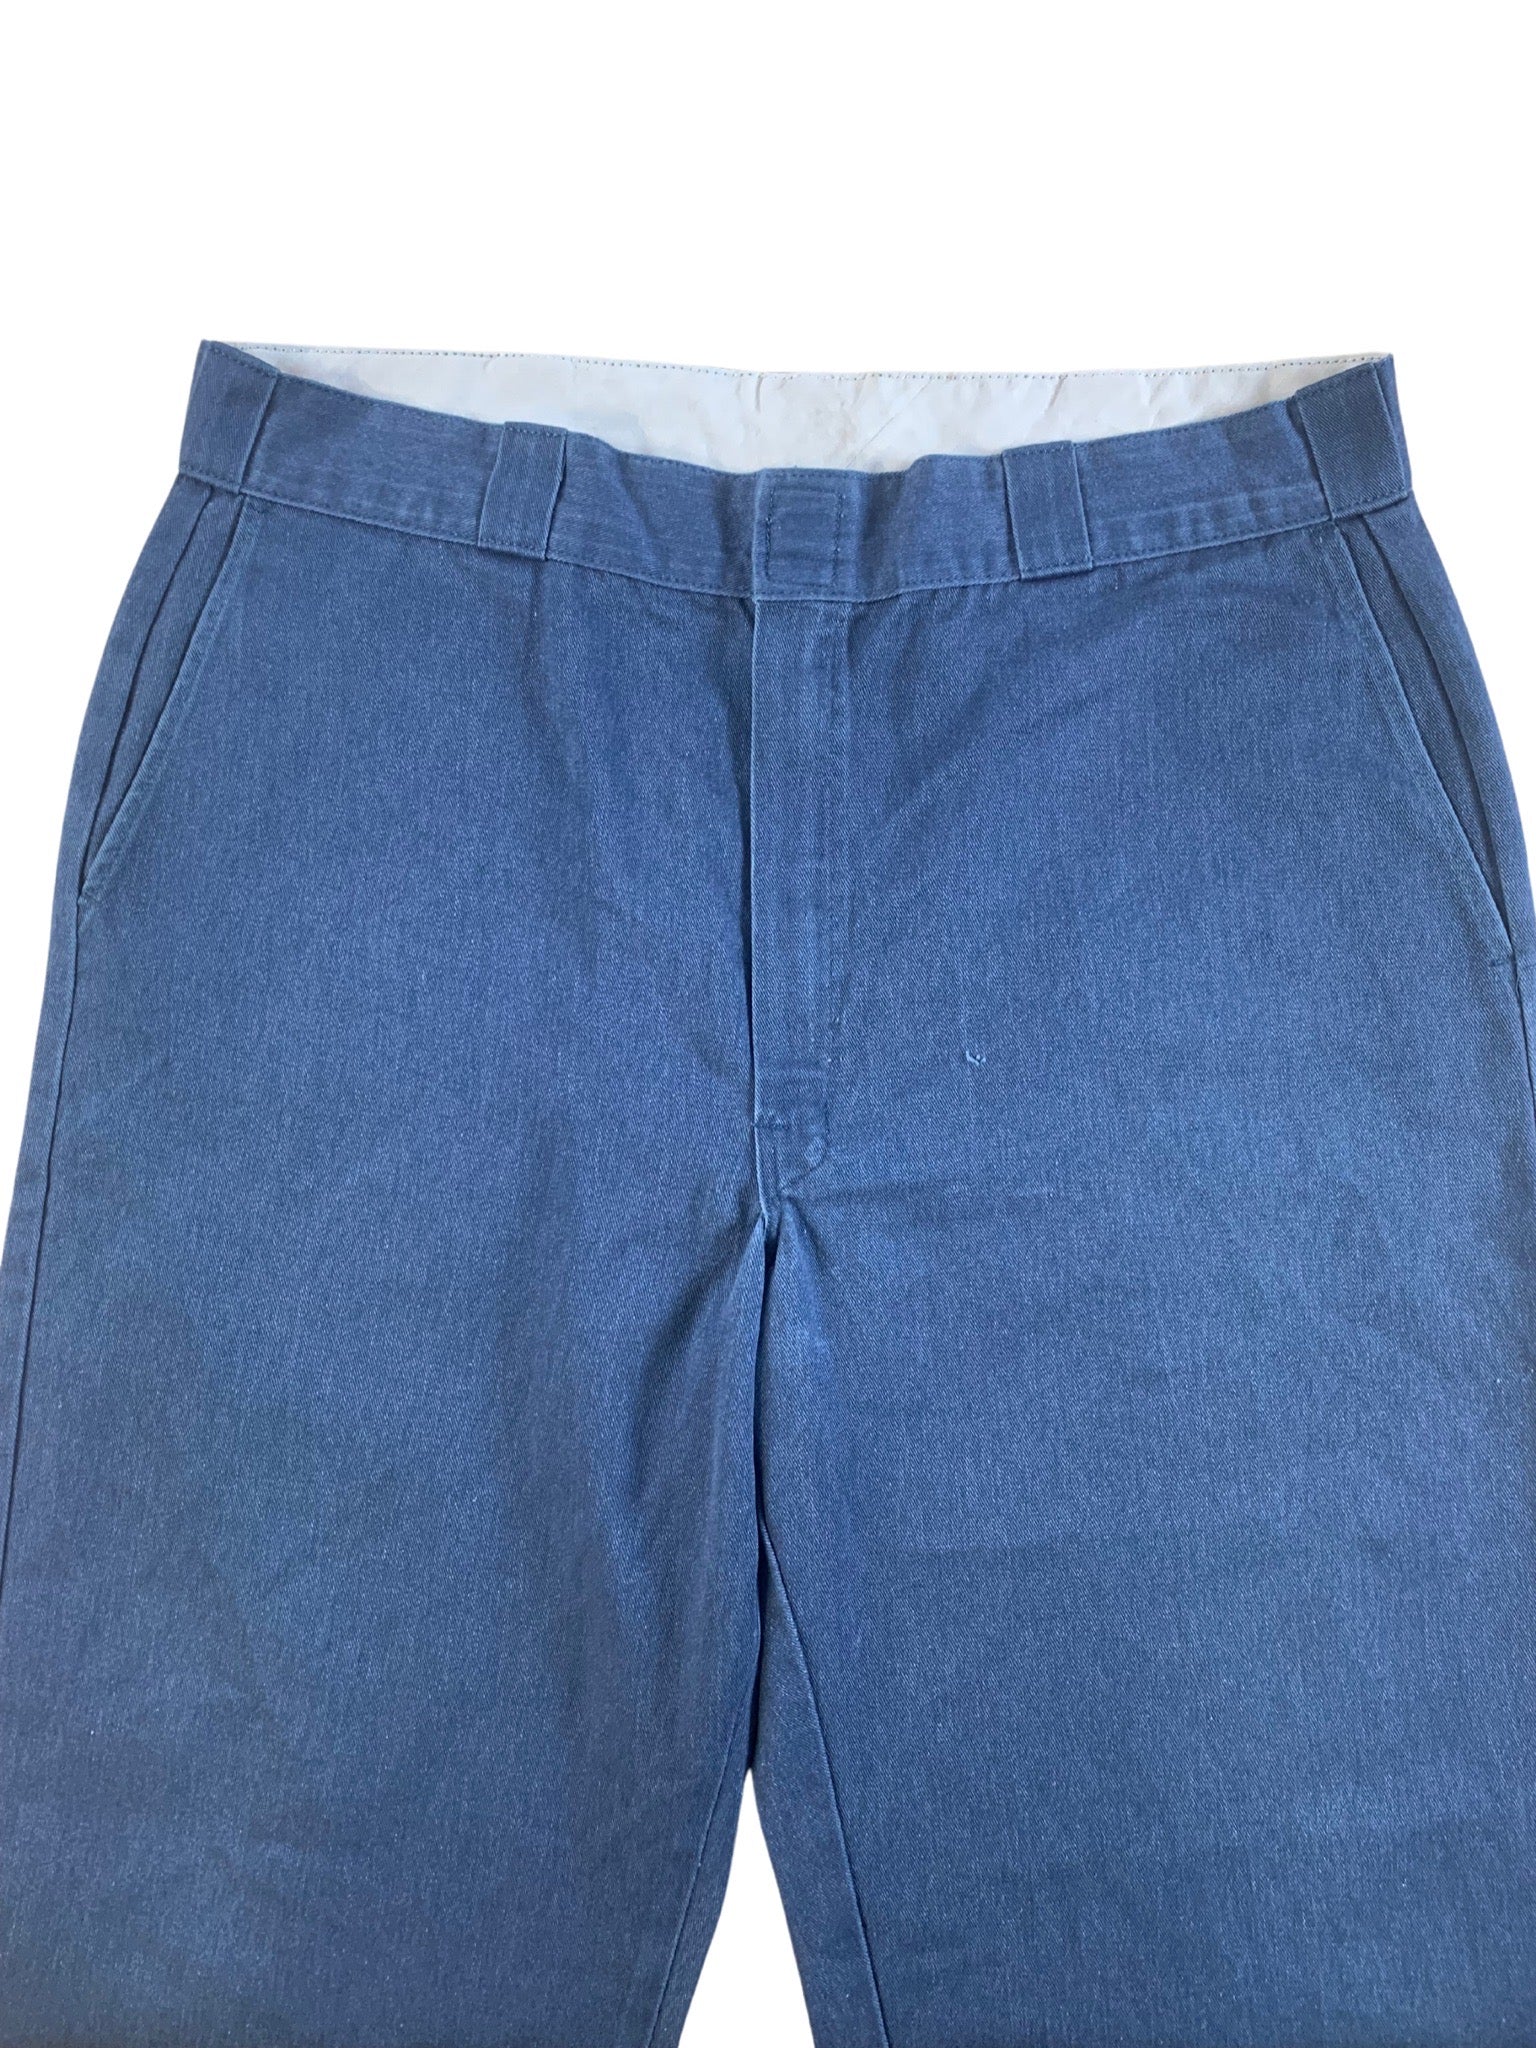 1x Vintage DICKIES Navy Blue Straight Leg Trousers - Waist 38 - Length 34 - Vintage Superstore Online